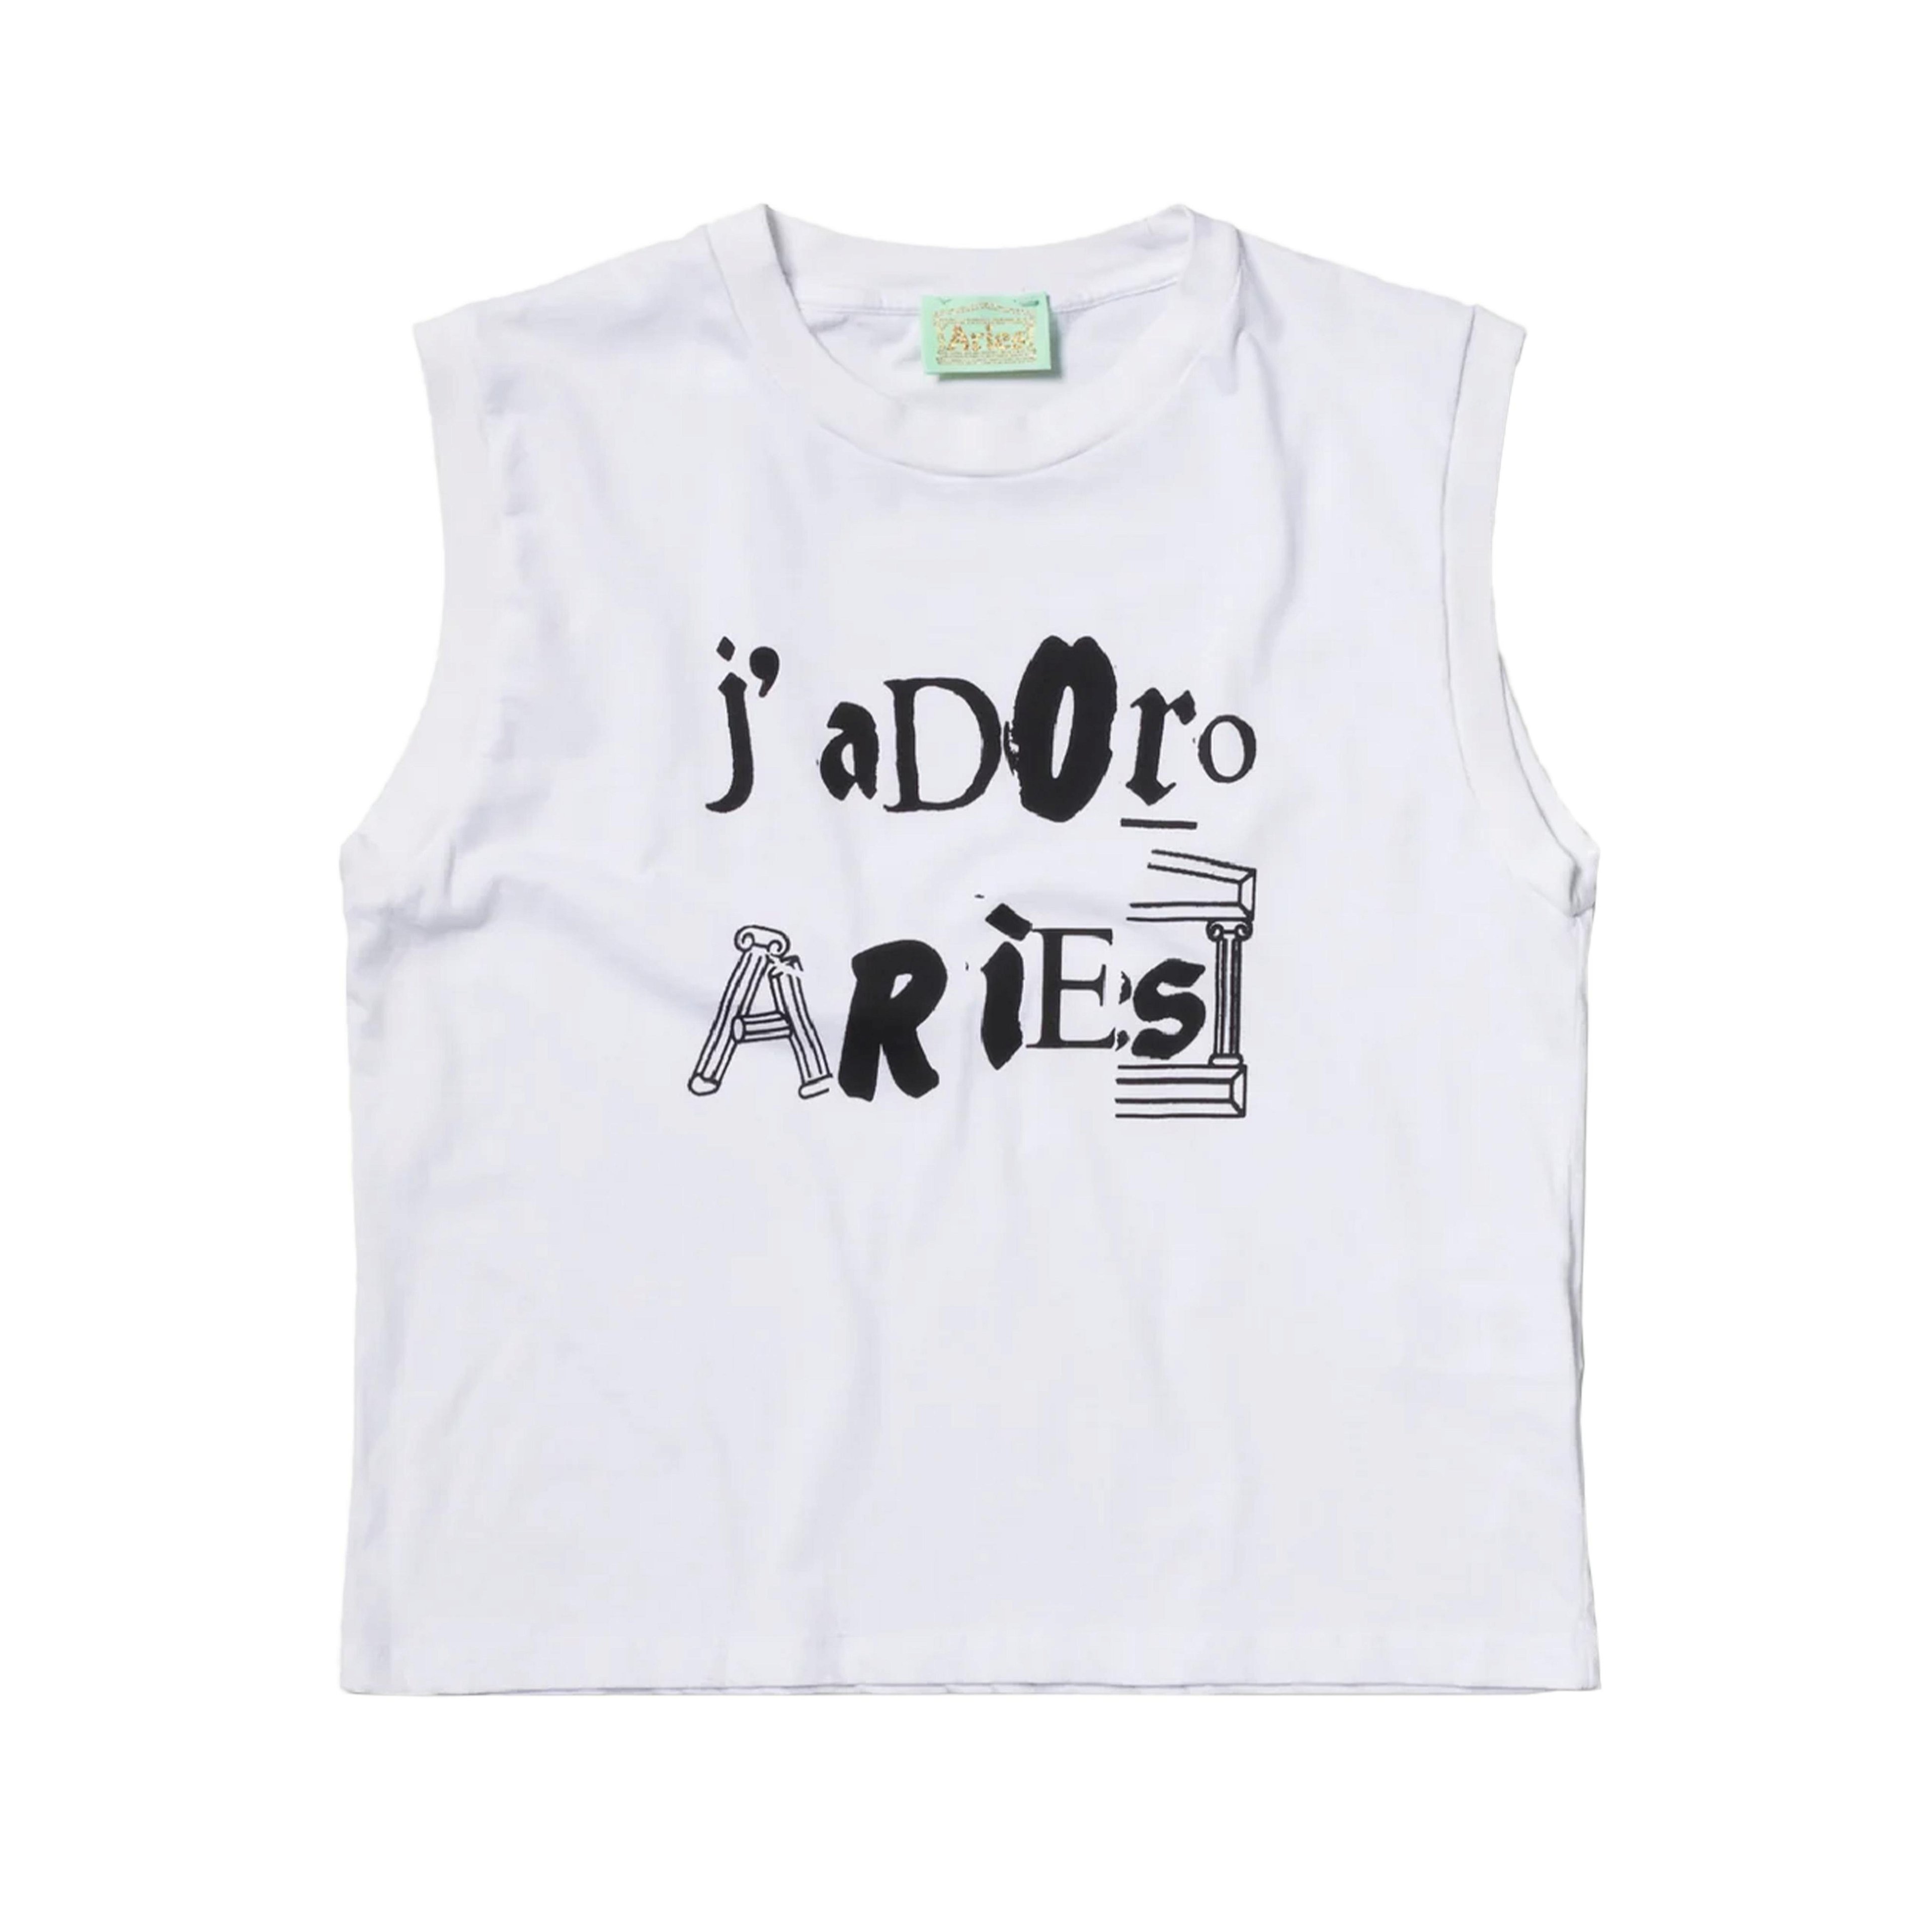 ARIES - J'adoro Aries Ransom Shrunken Vest - (White) by ARIES